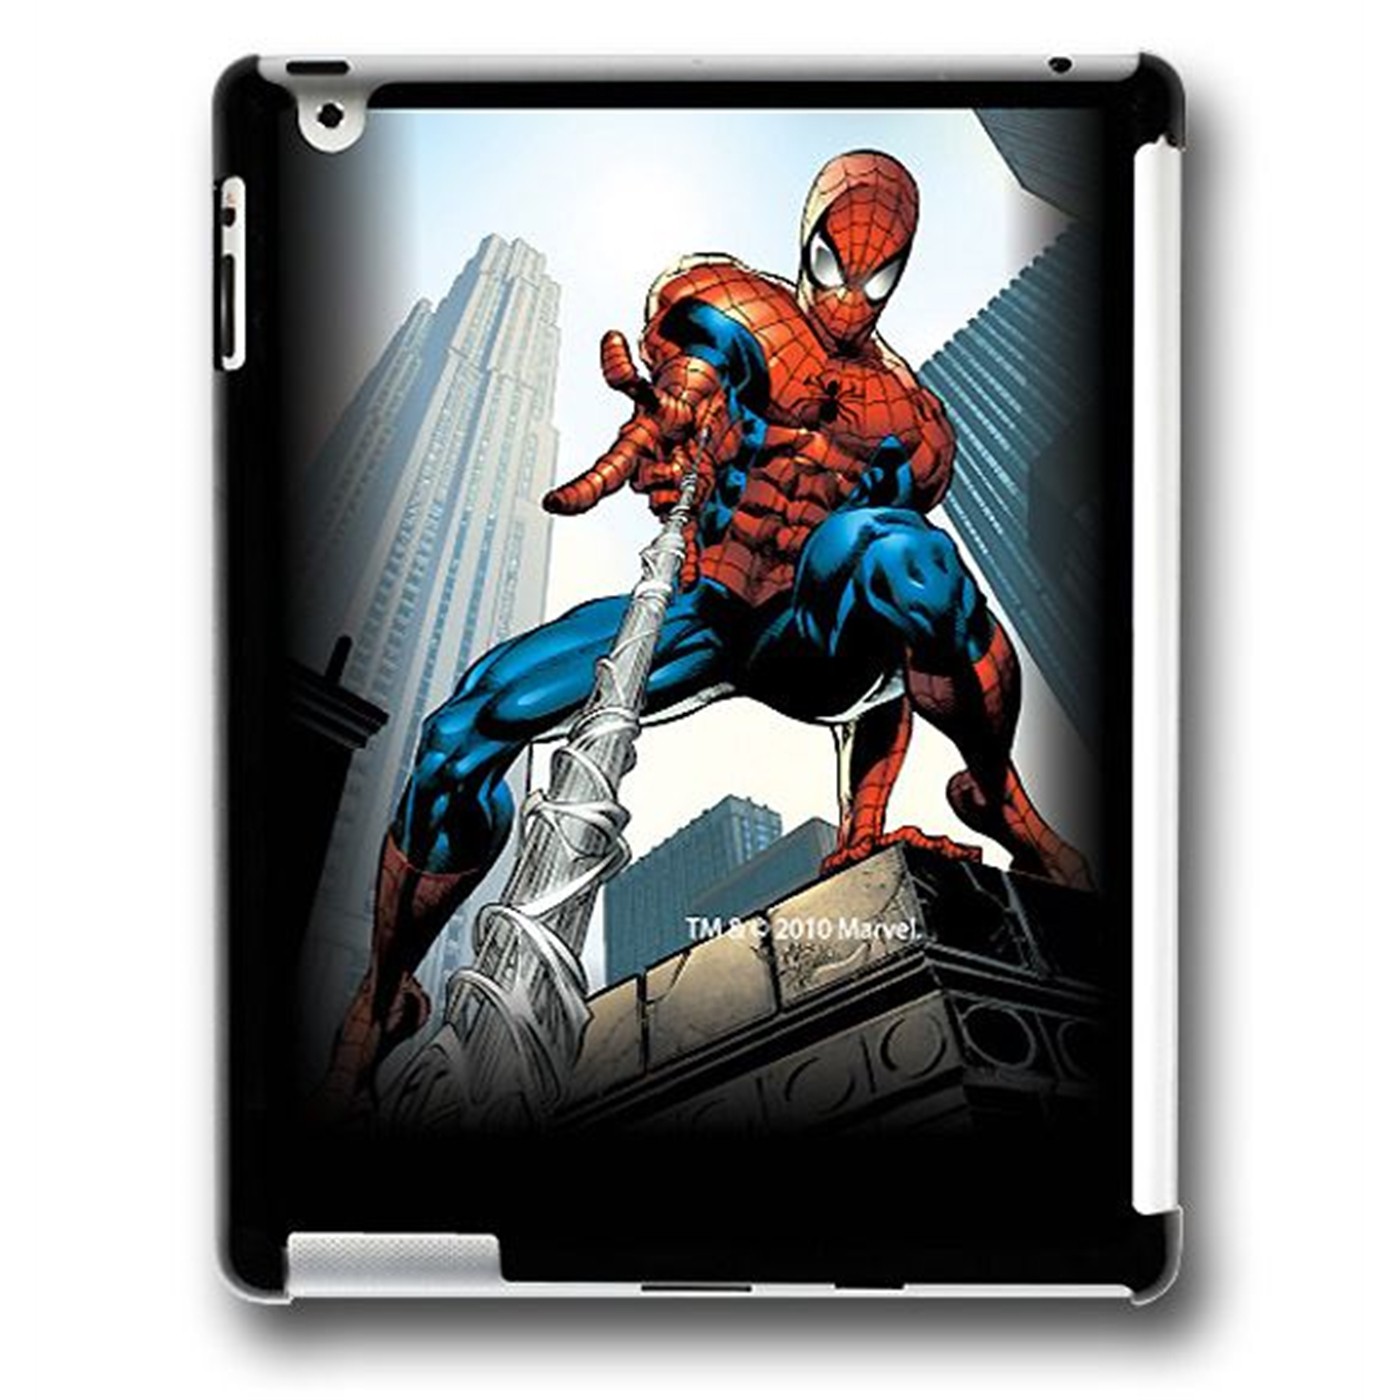 Spiderman Pose iPad 2 Case